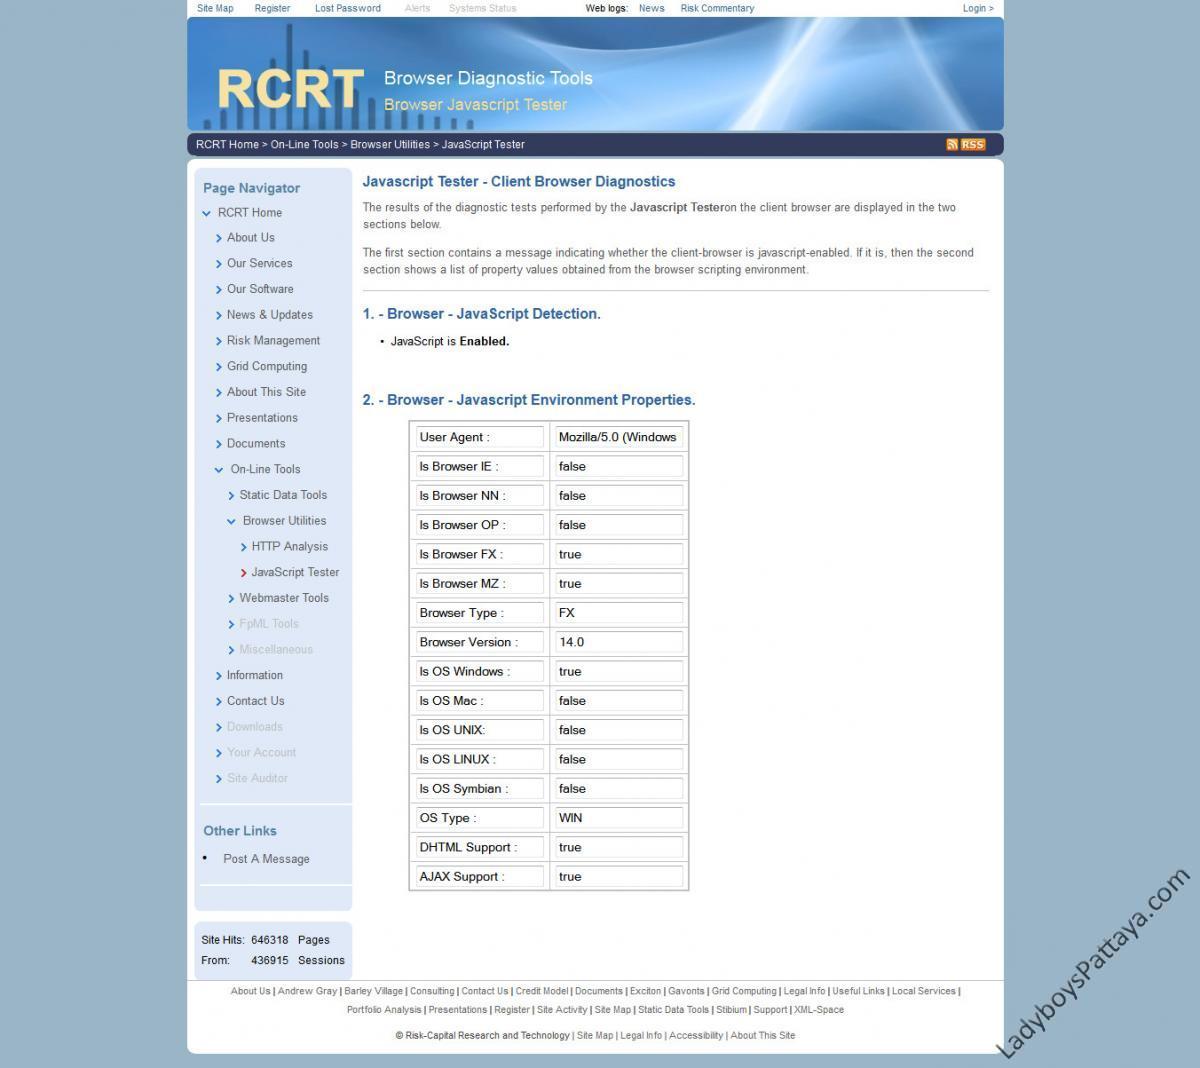 www.rcrt.co.uk screen capture 2012-8-12-19-40-26.jpg